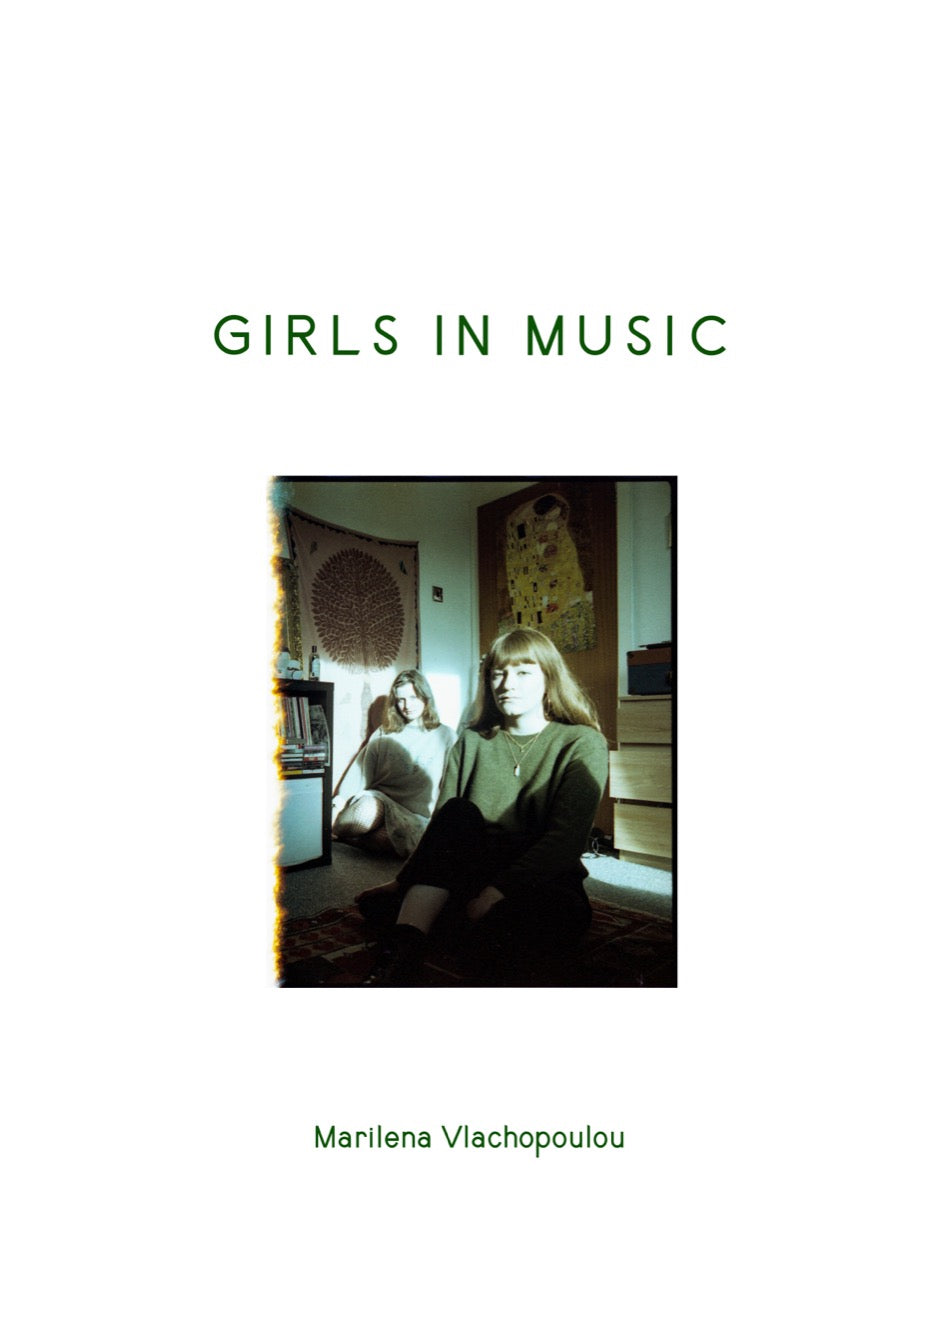 Girls In Music, by Marilena Vlachopoulou